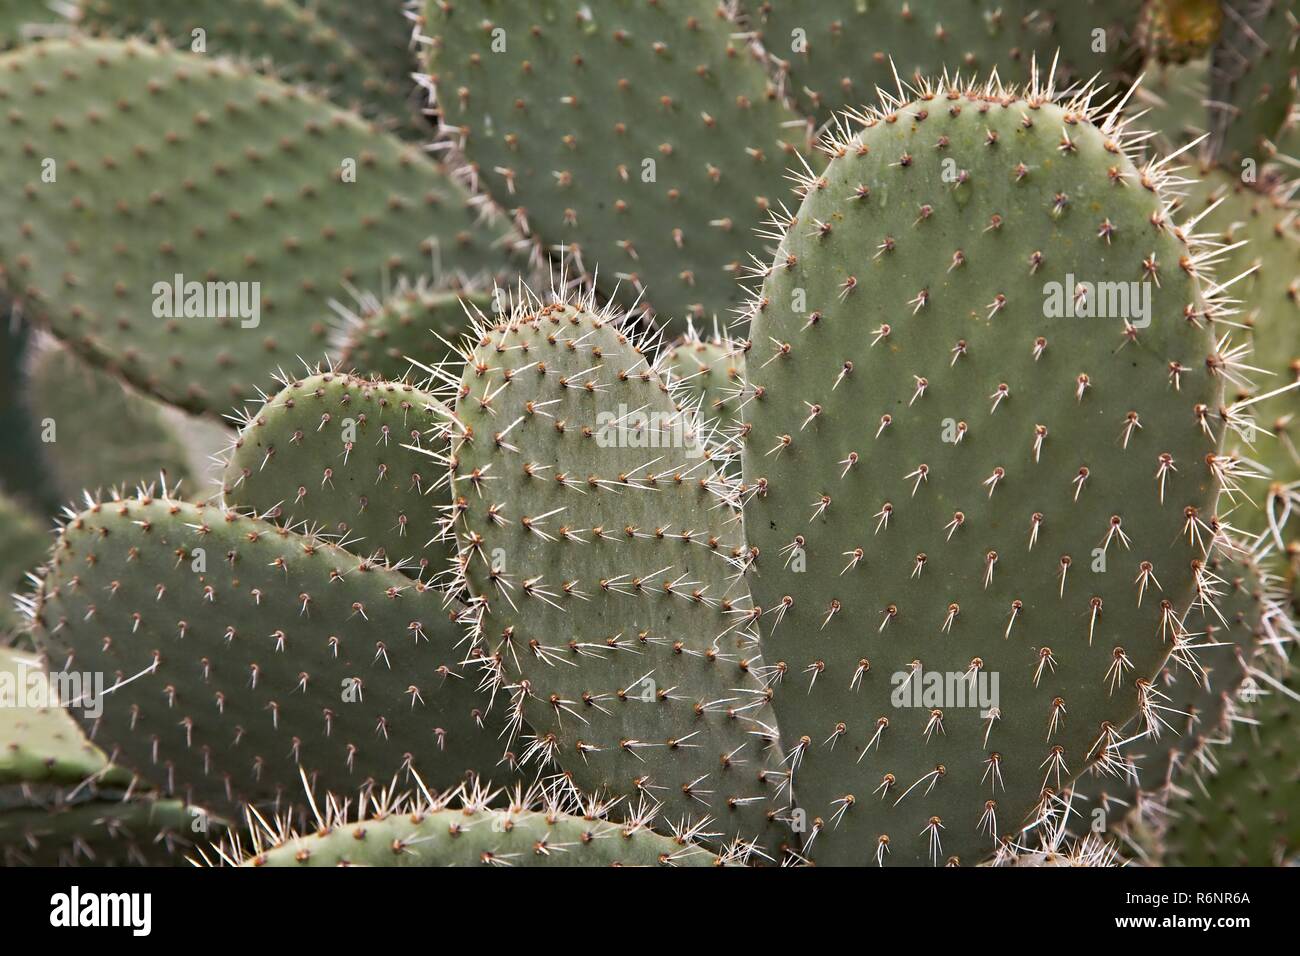 Detalle de la planta de cactus Foto de stock